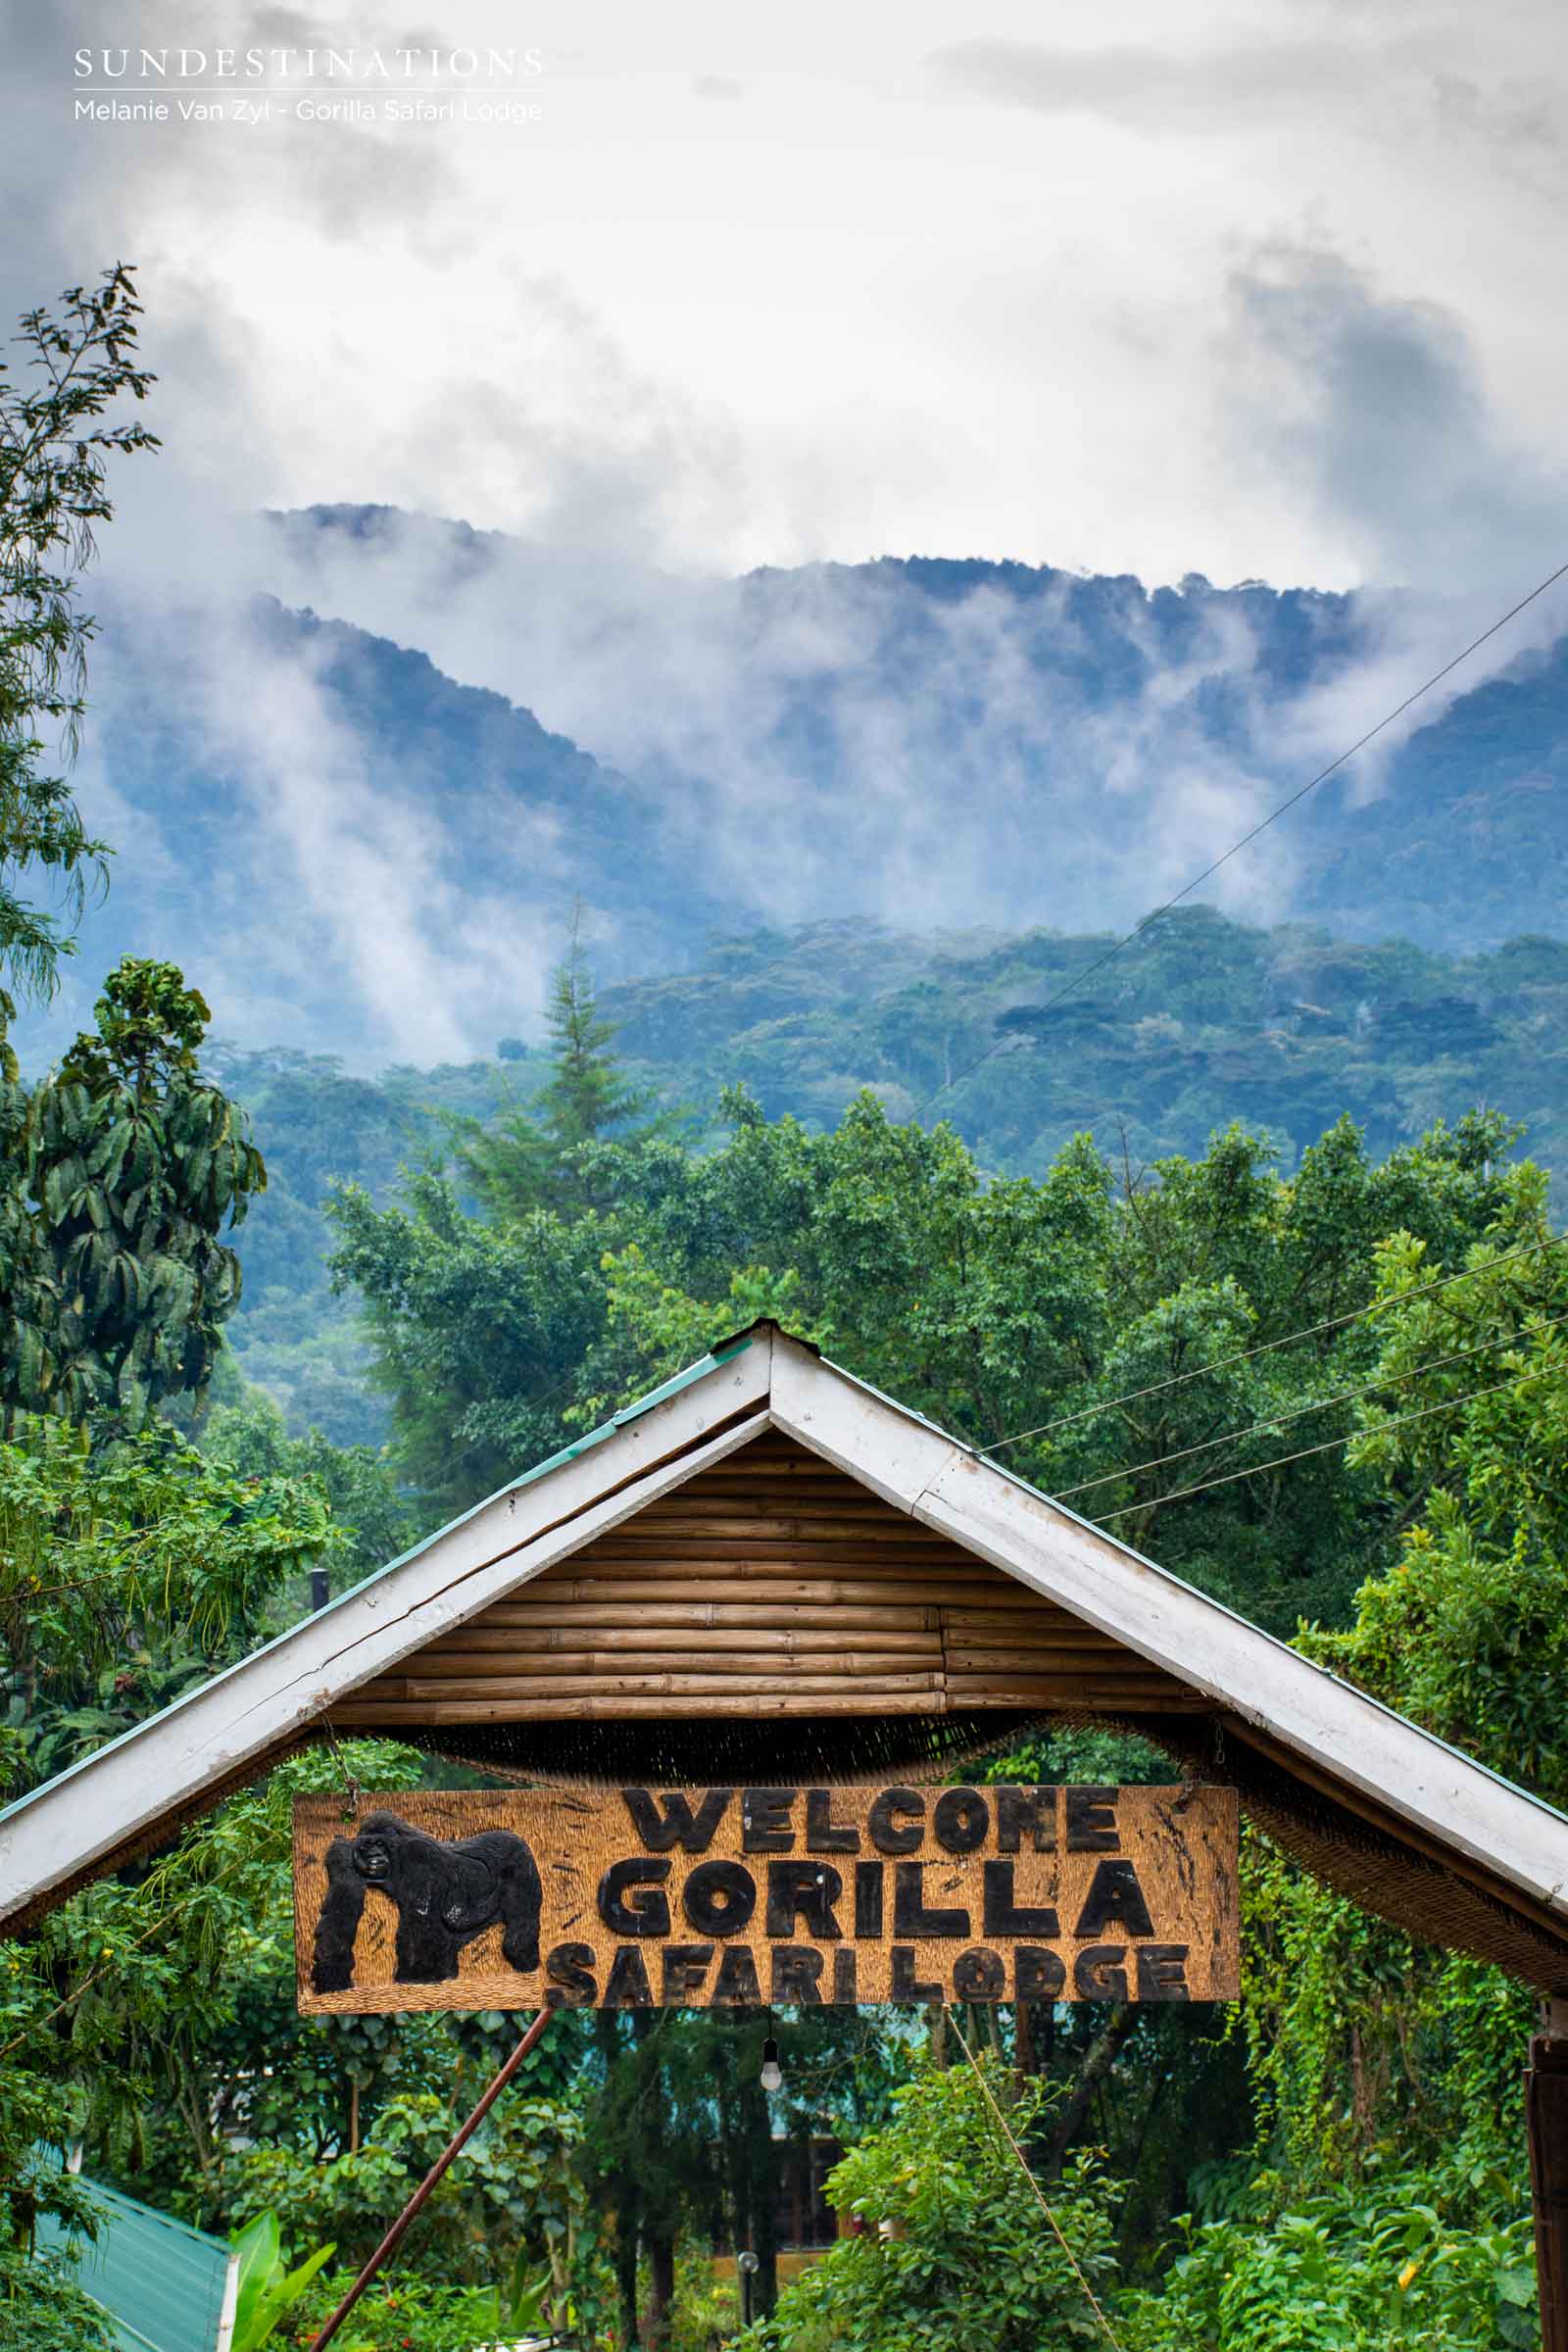 Gorilla Safari Lodge Conservation